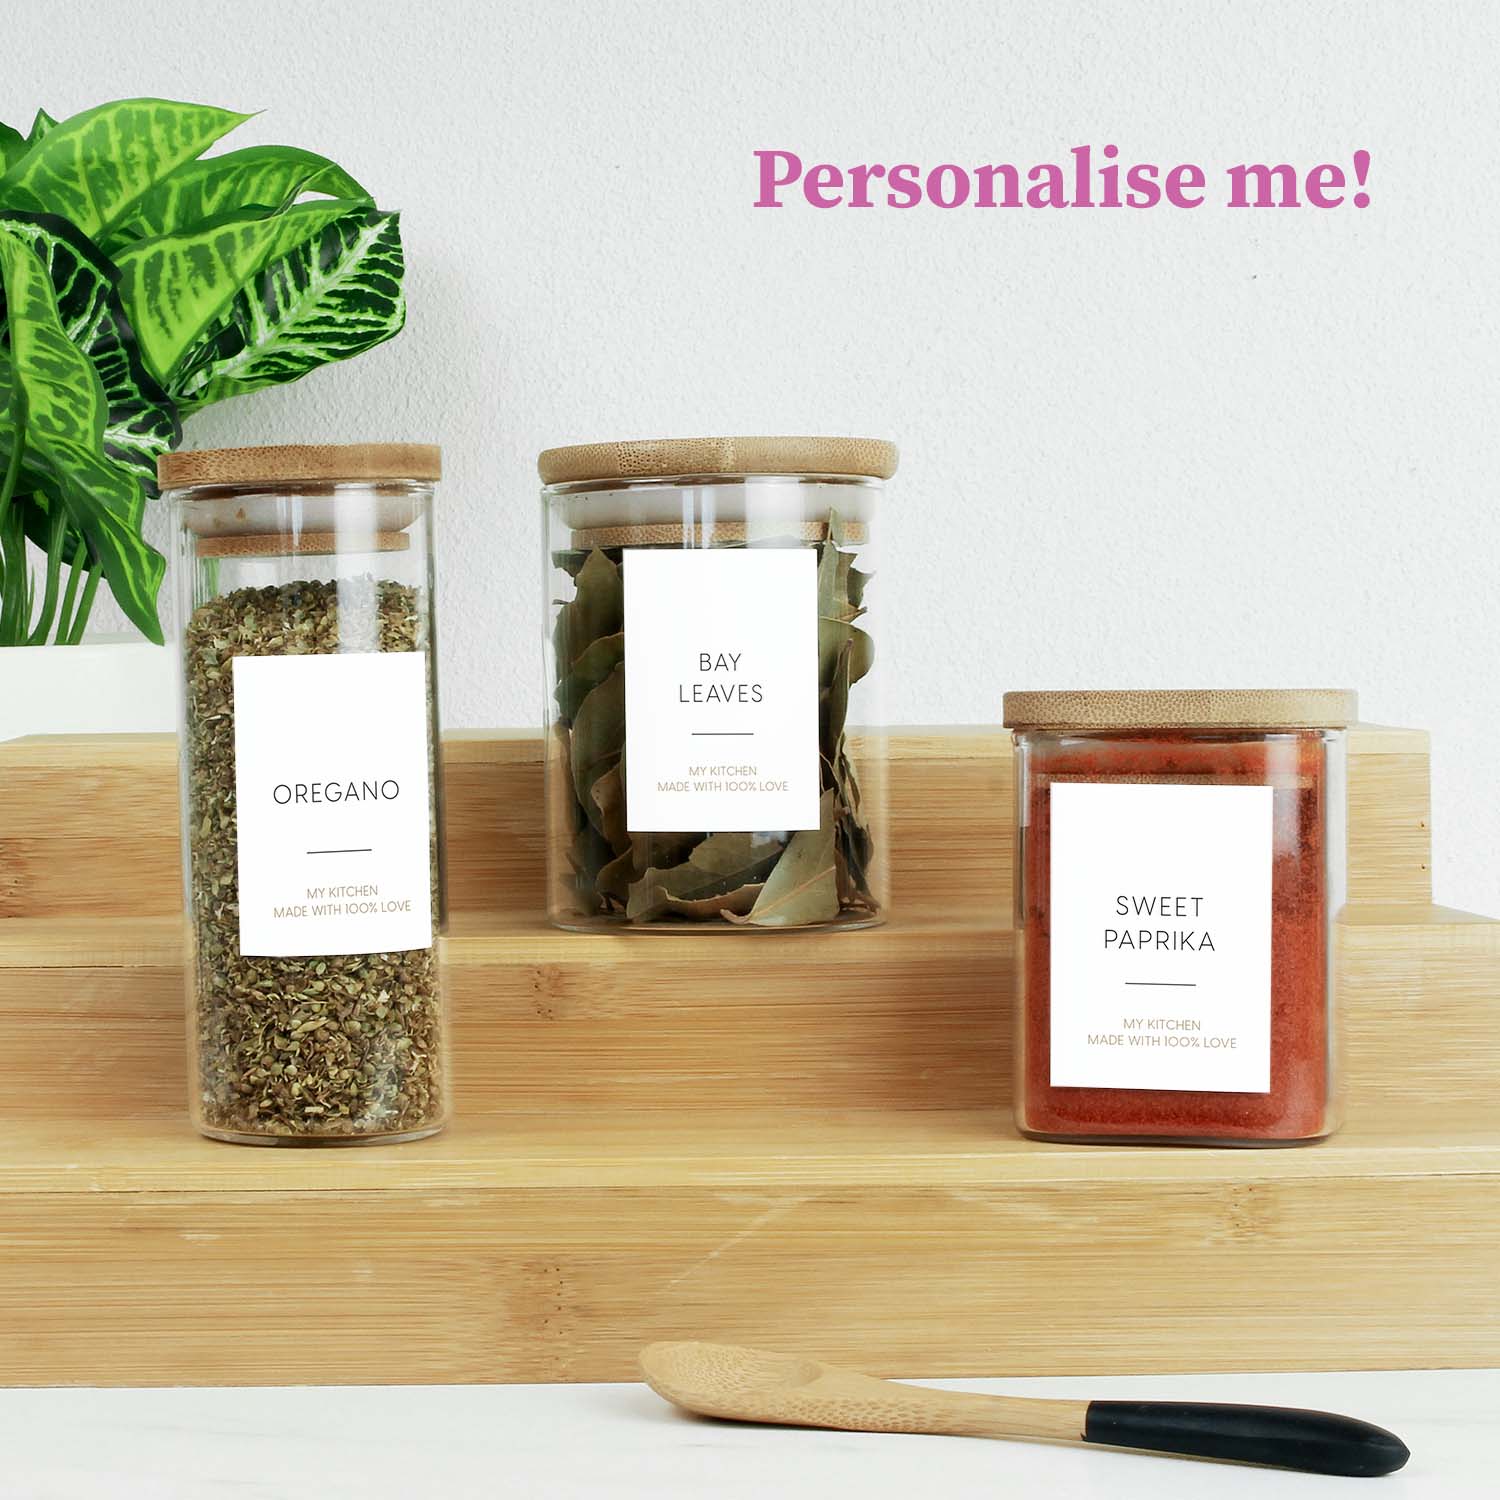 Rectangle Spice jar labels